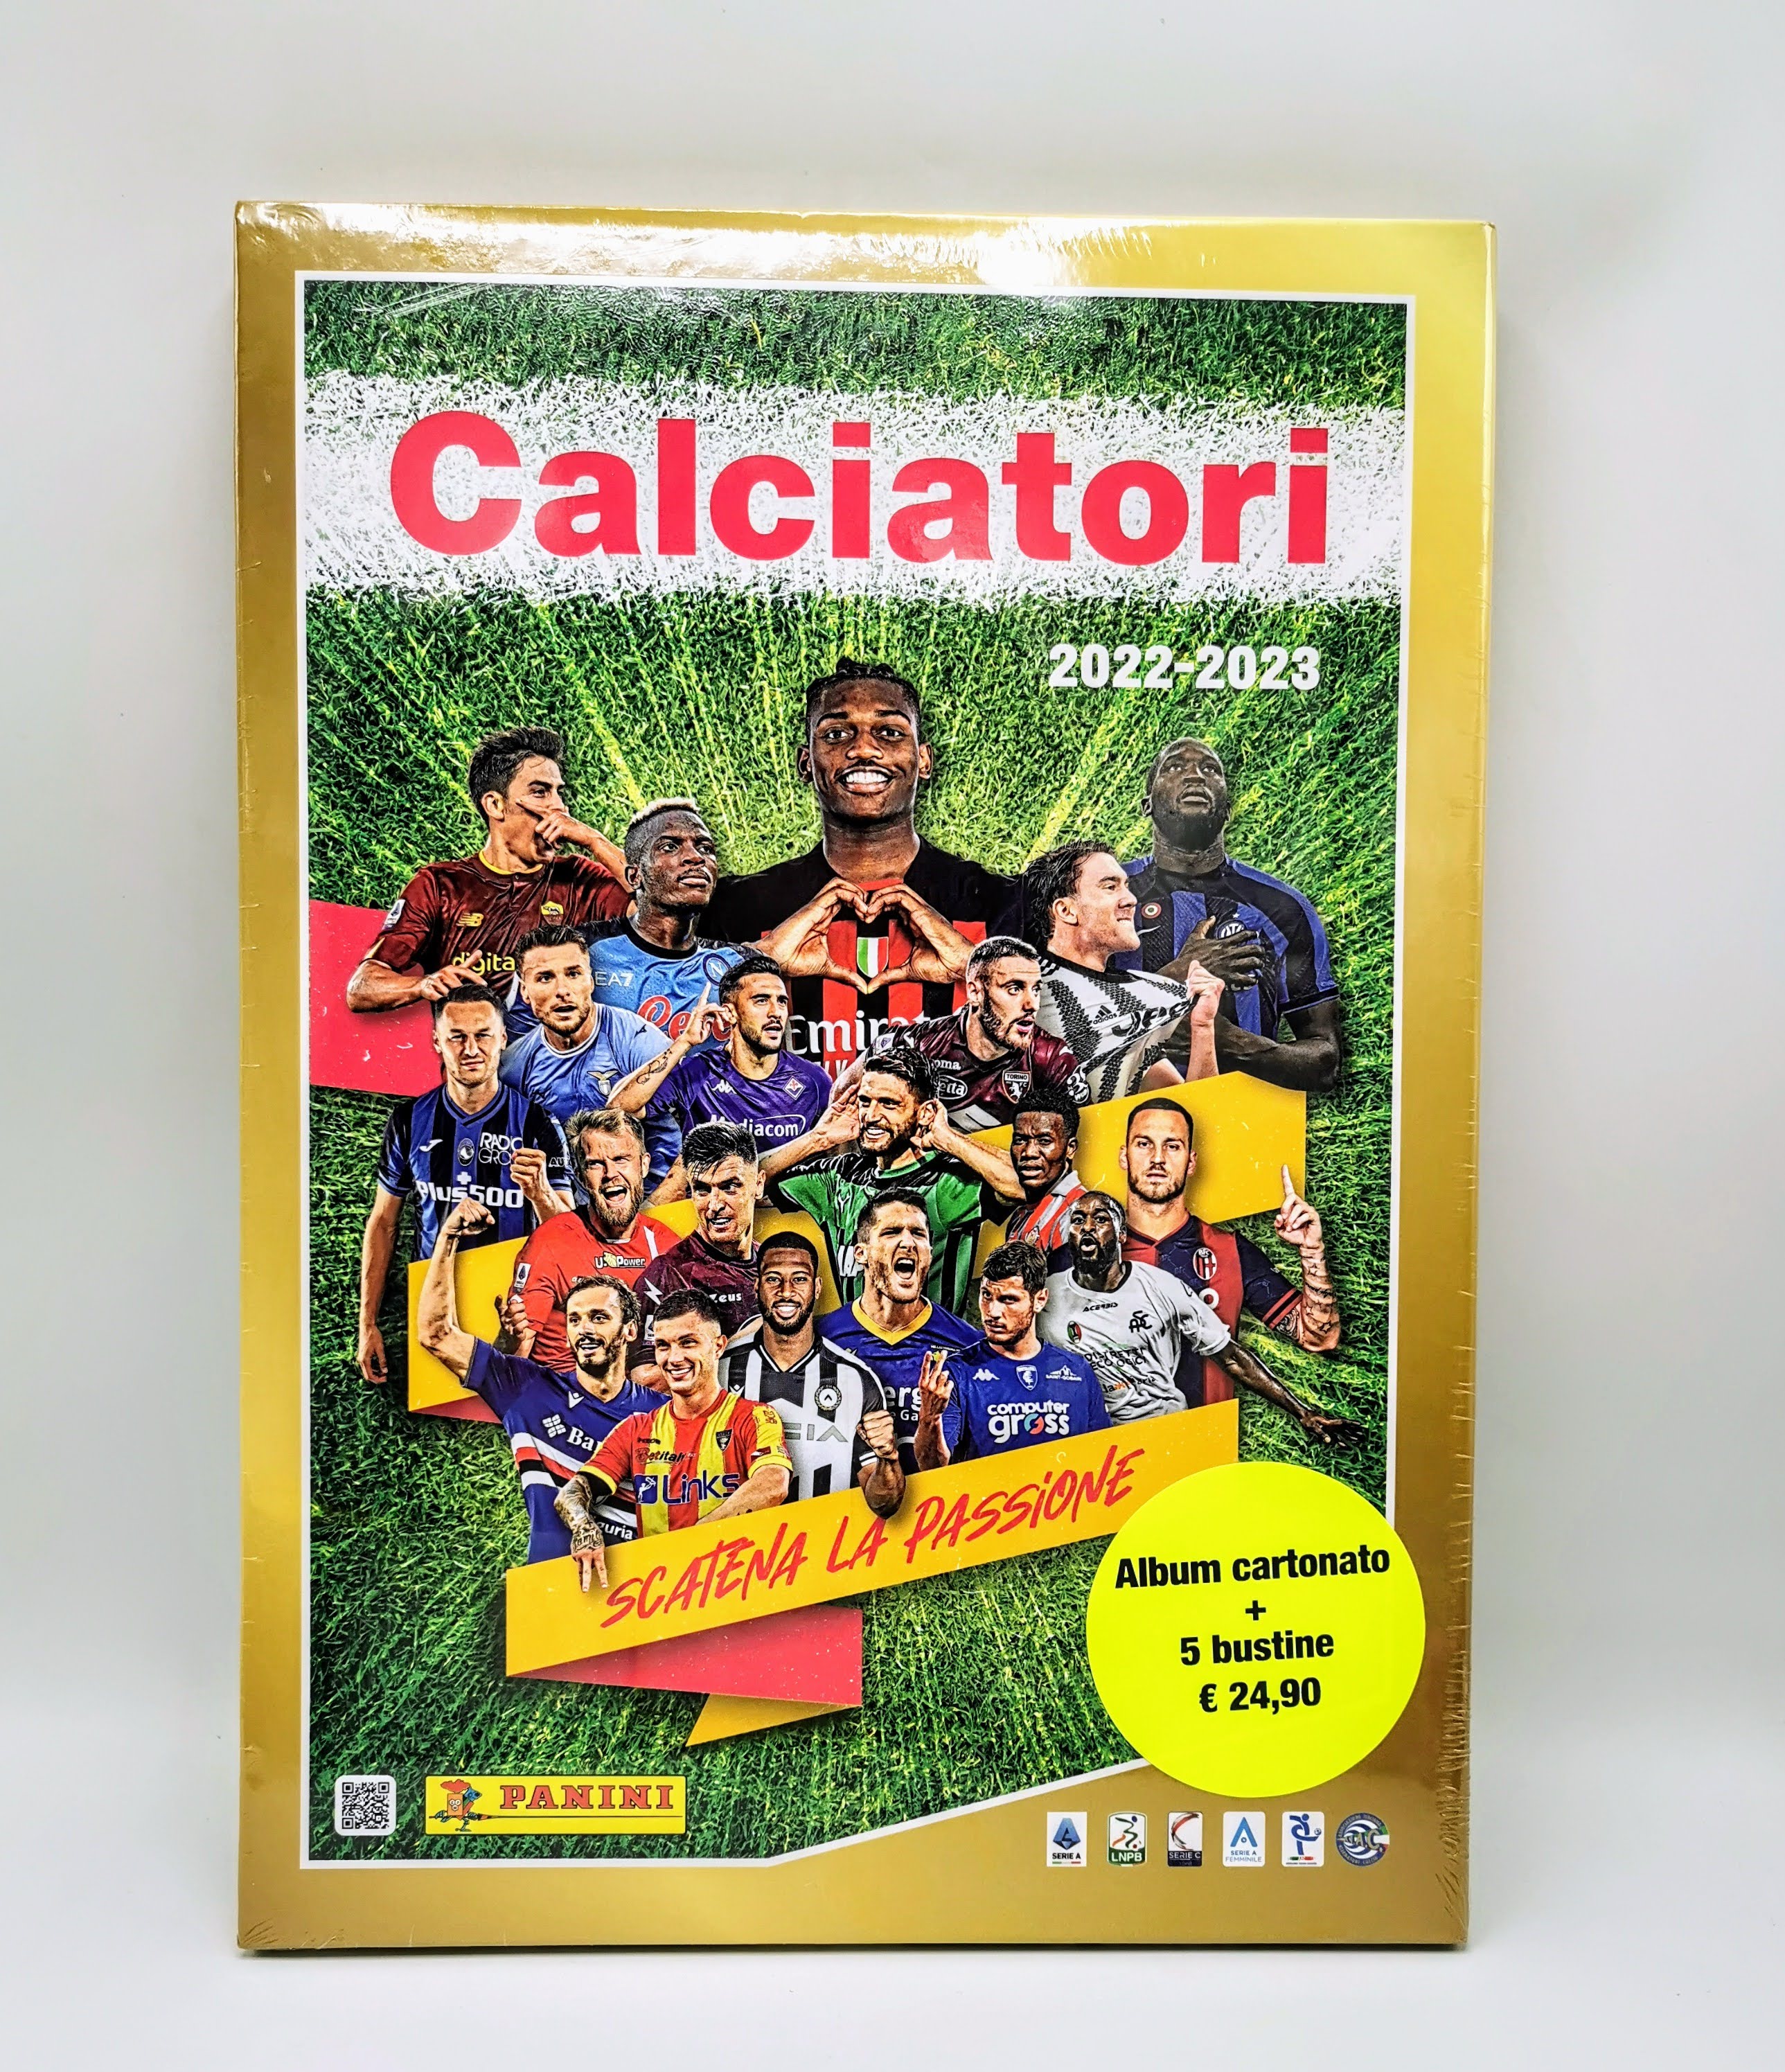 Calciatori Panini 2022 2023 album Cartonato Hardcover + 5 bustine figurine  sigillato - manuelkant